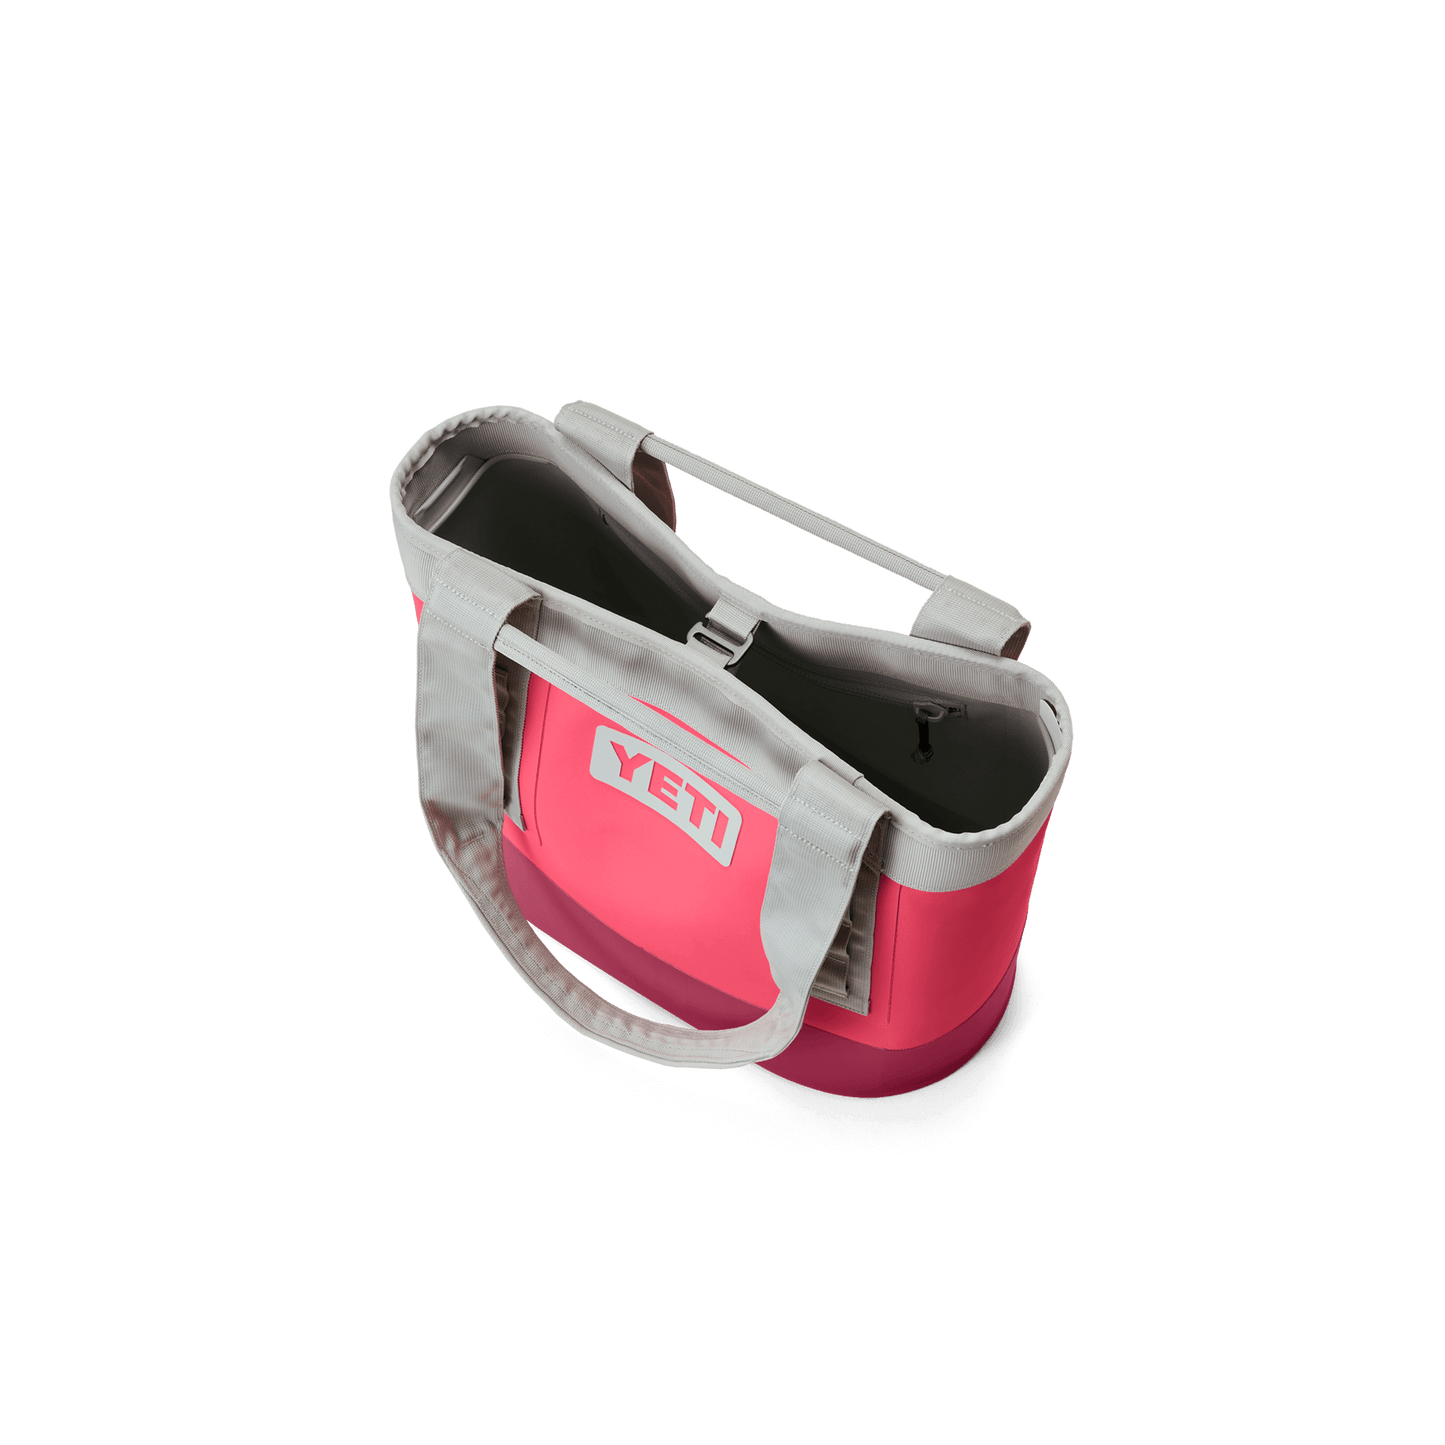 YETI Camino® 20-carryall Bimini Pink